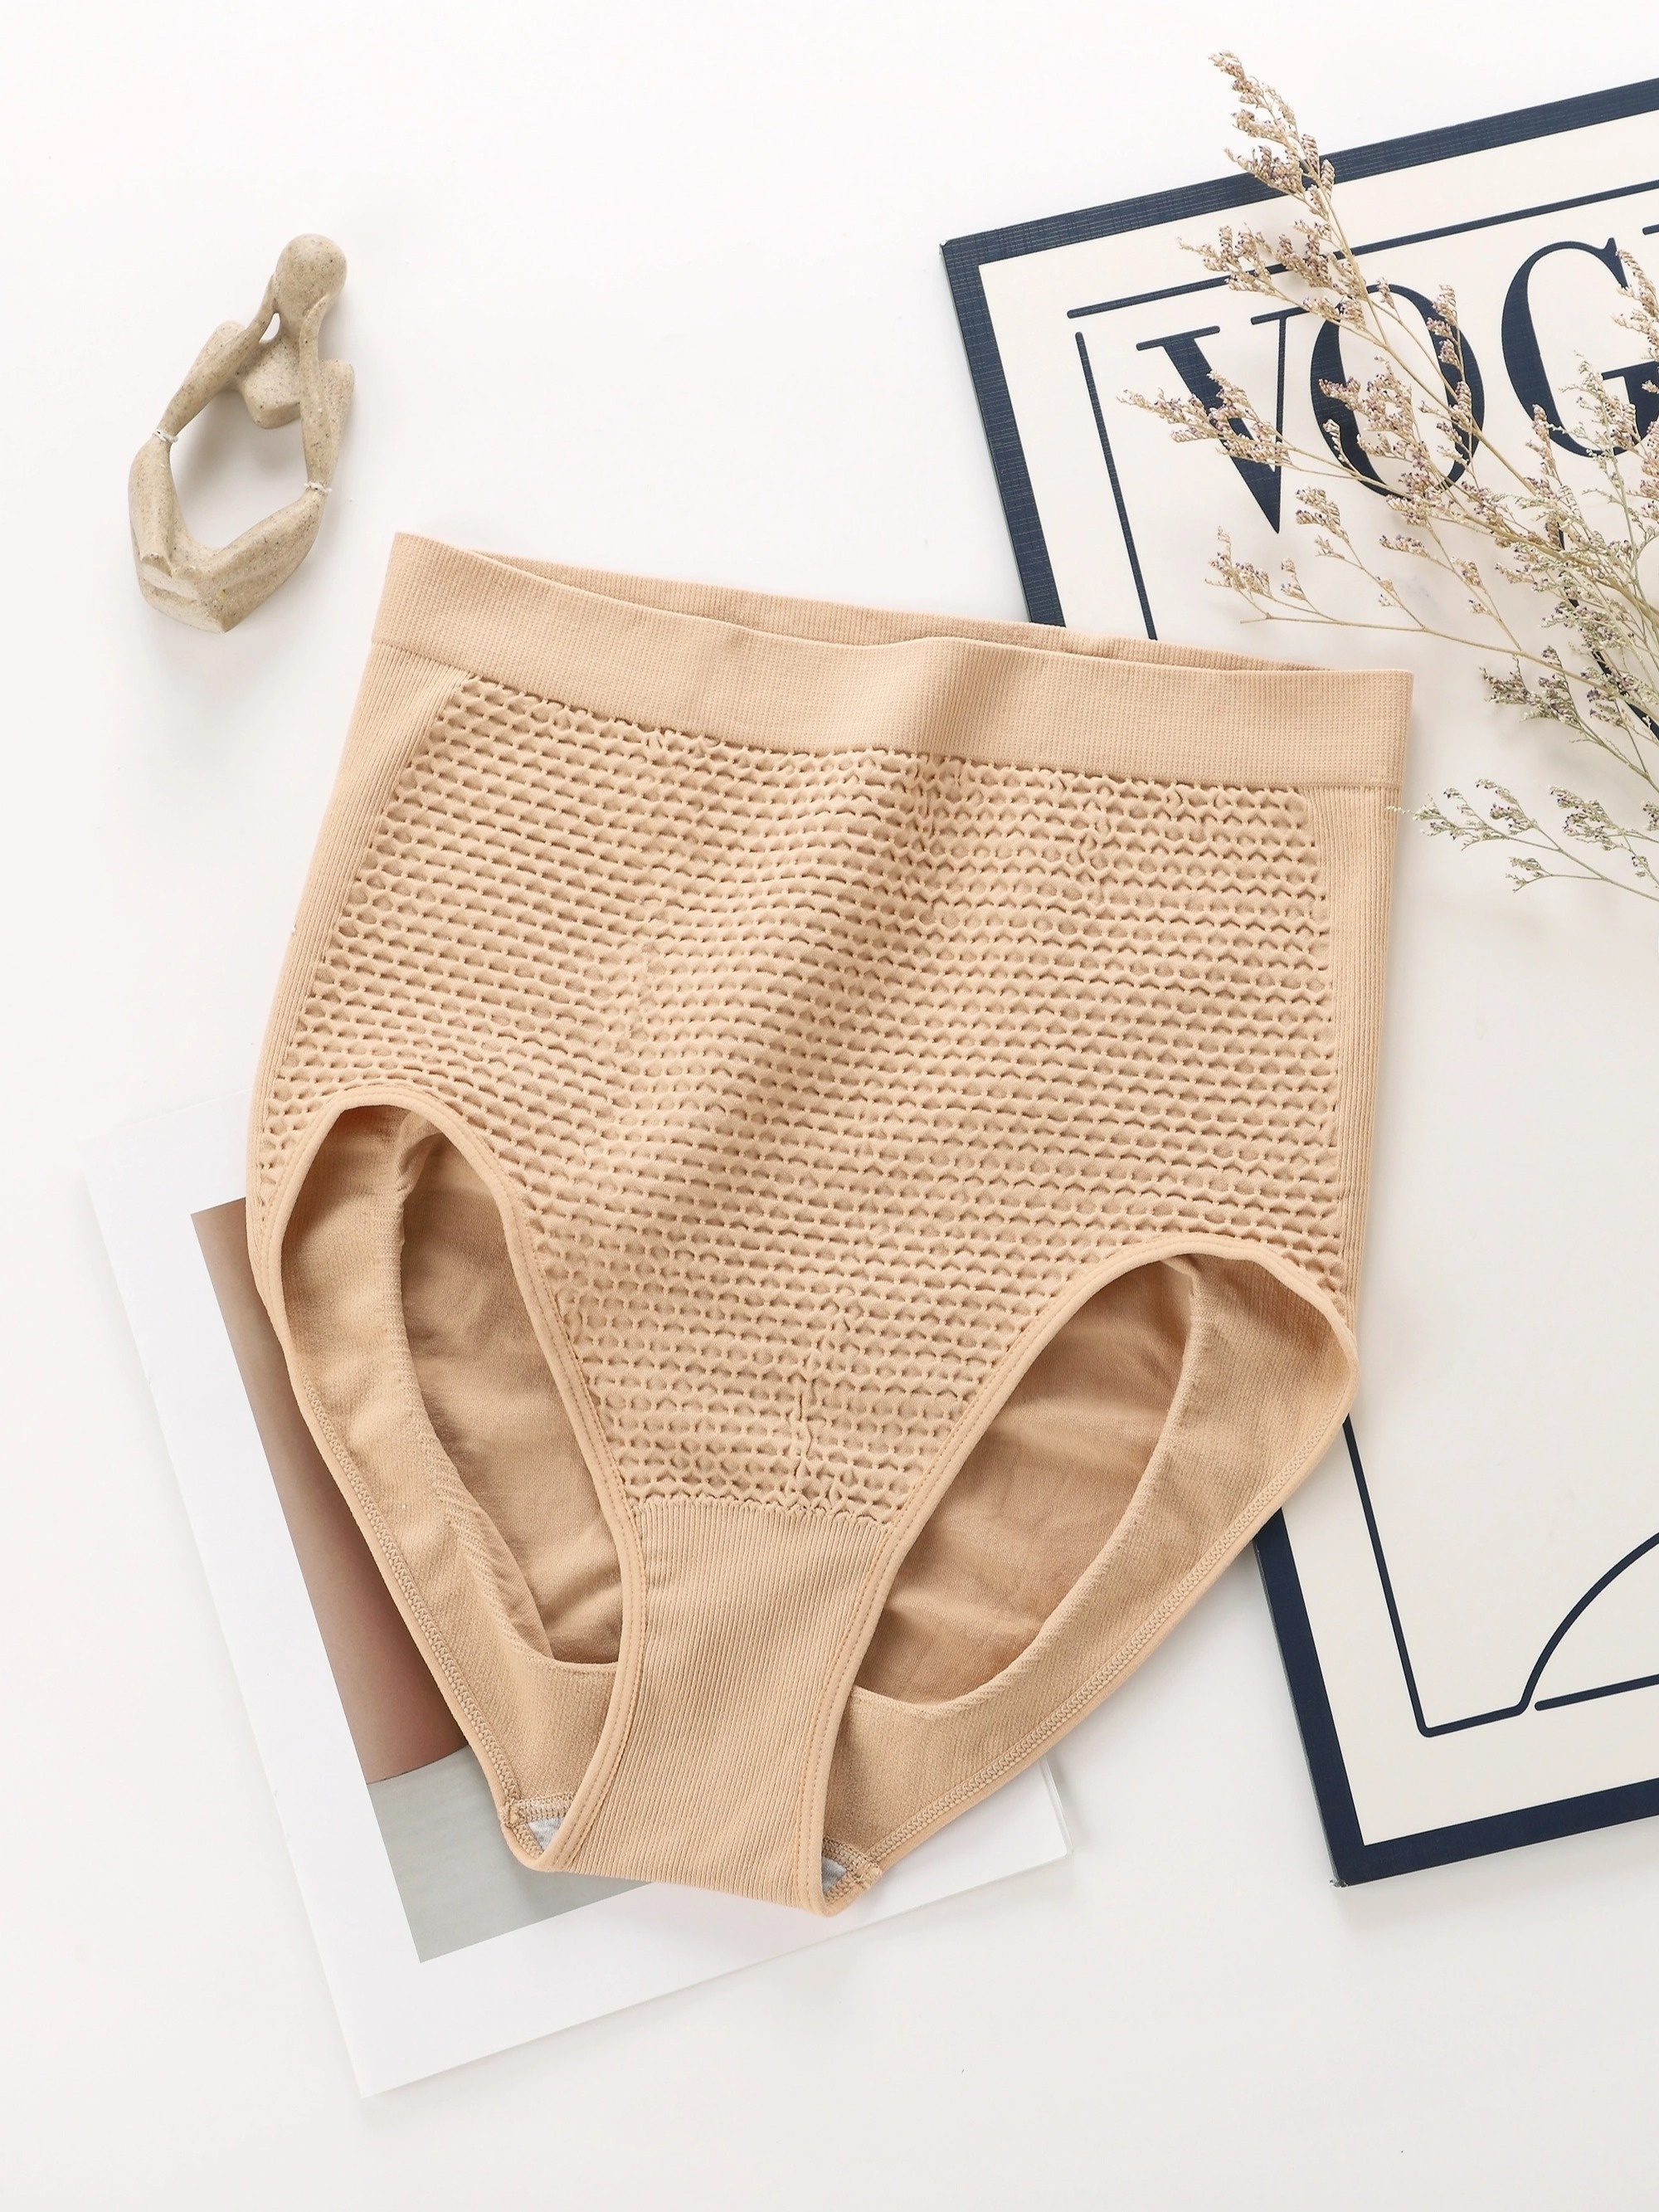 1pc Honeycomb Warm Palace Postpartum Belly Control Underwear Women